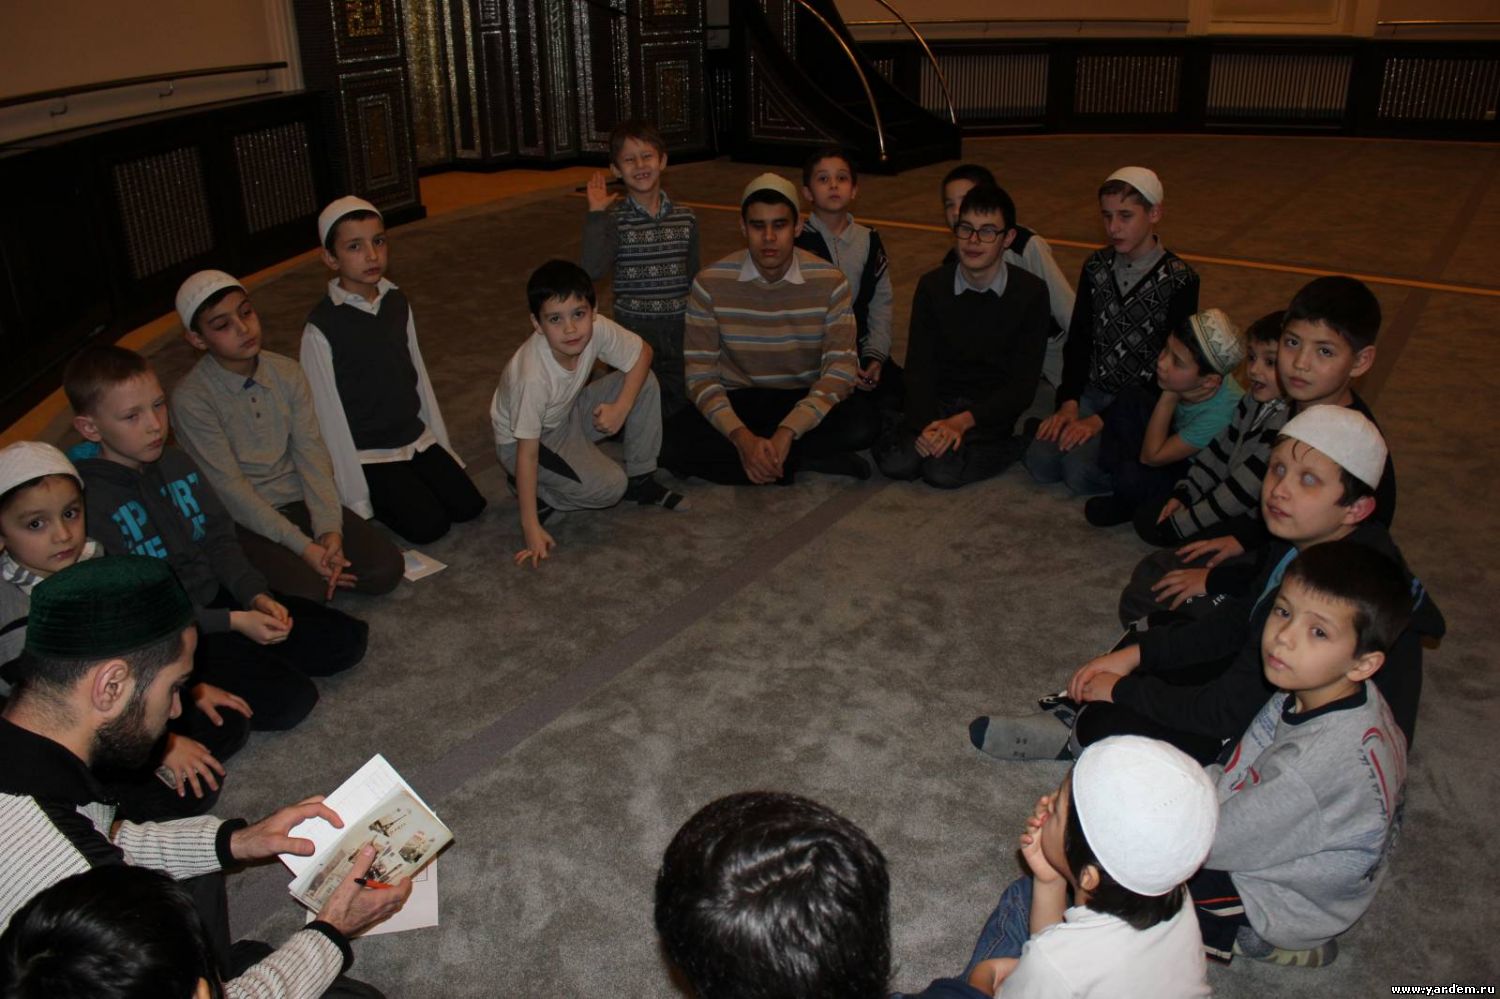 Научиться читать Коран помогут при мечети "Ярдэм" Казани